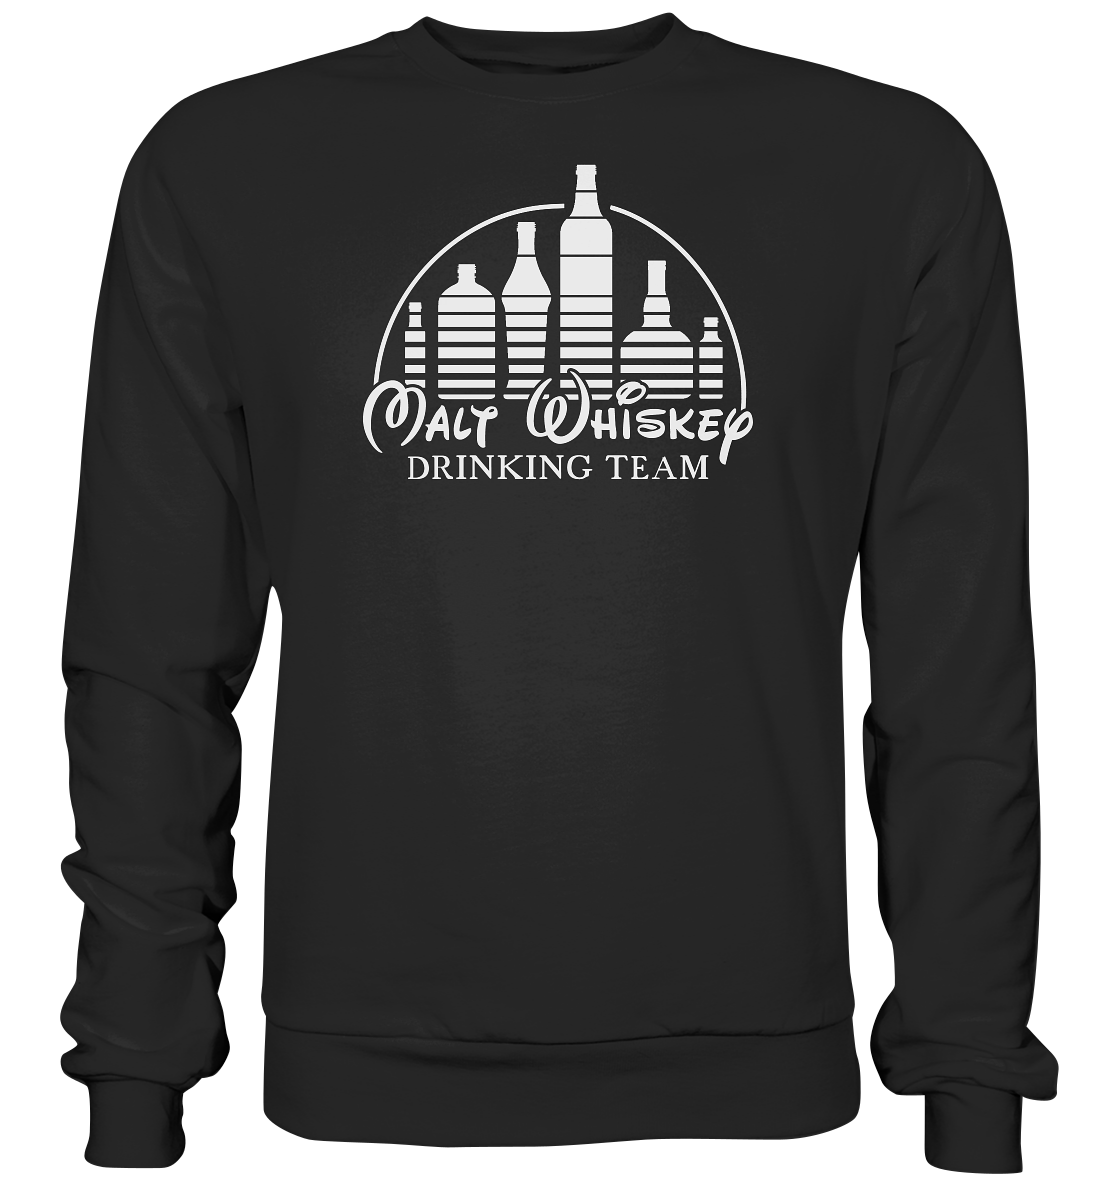 Malt Whiskey "Drinking Team" - Basic Sweatshirt